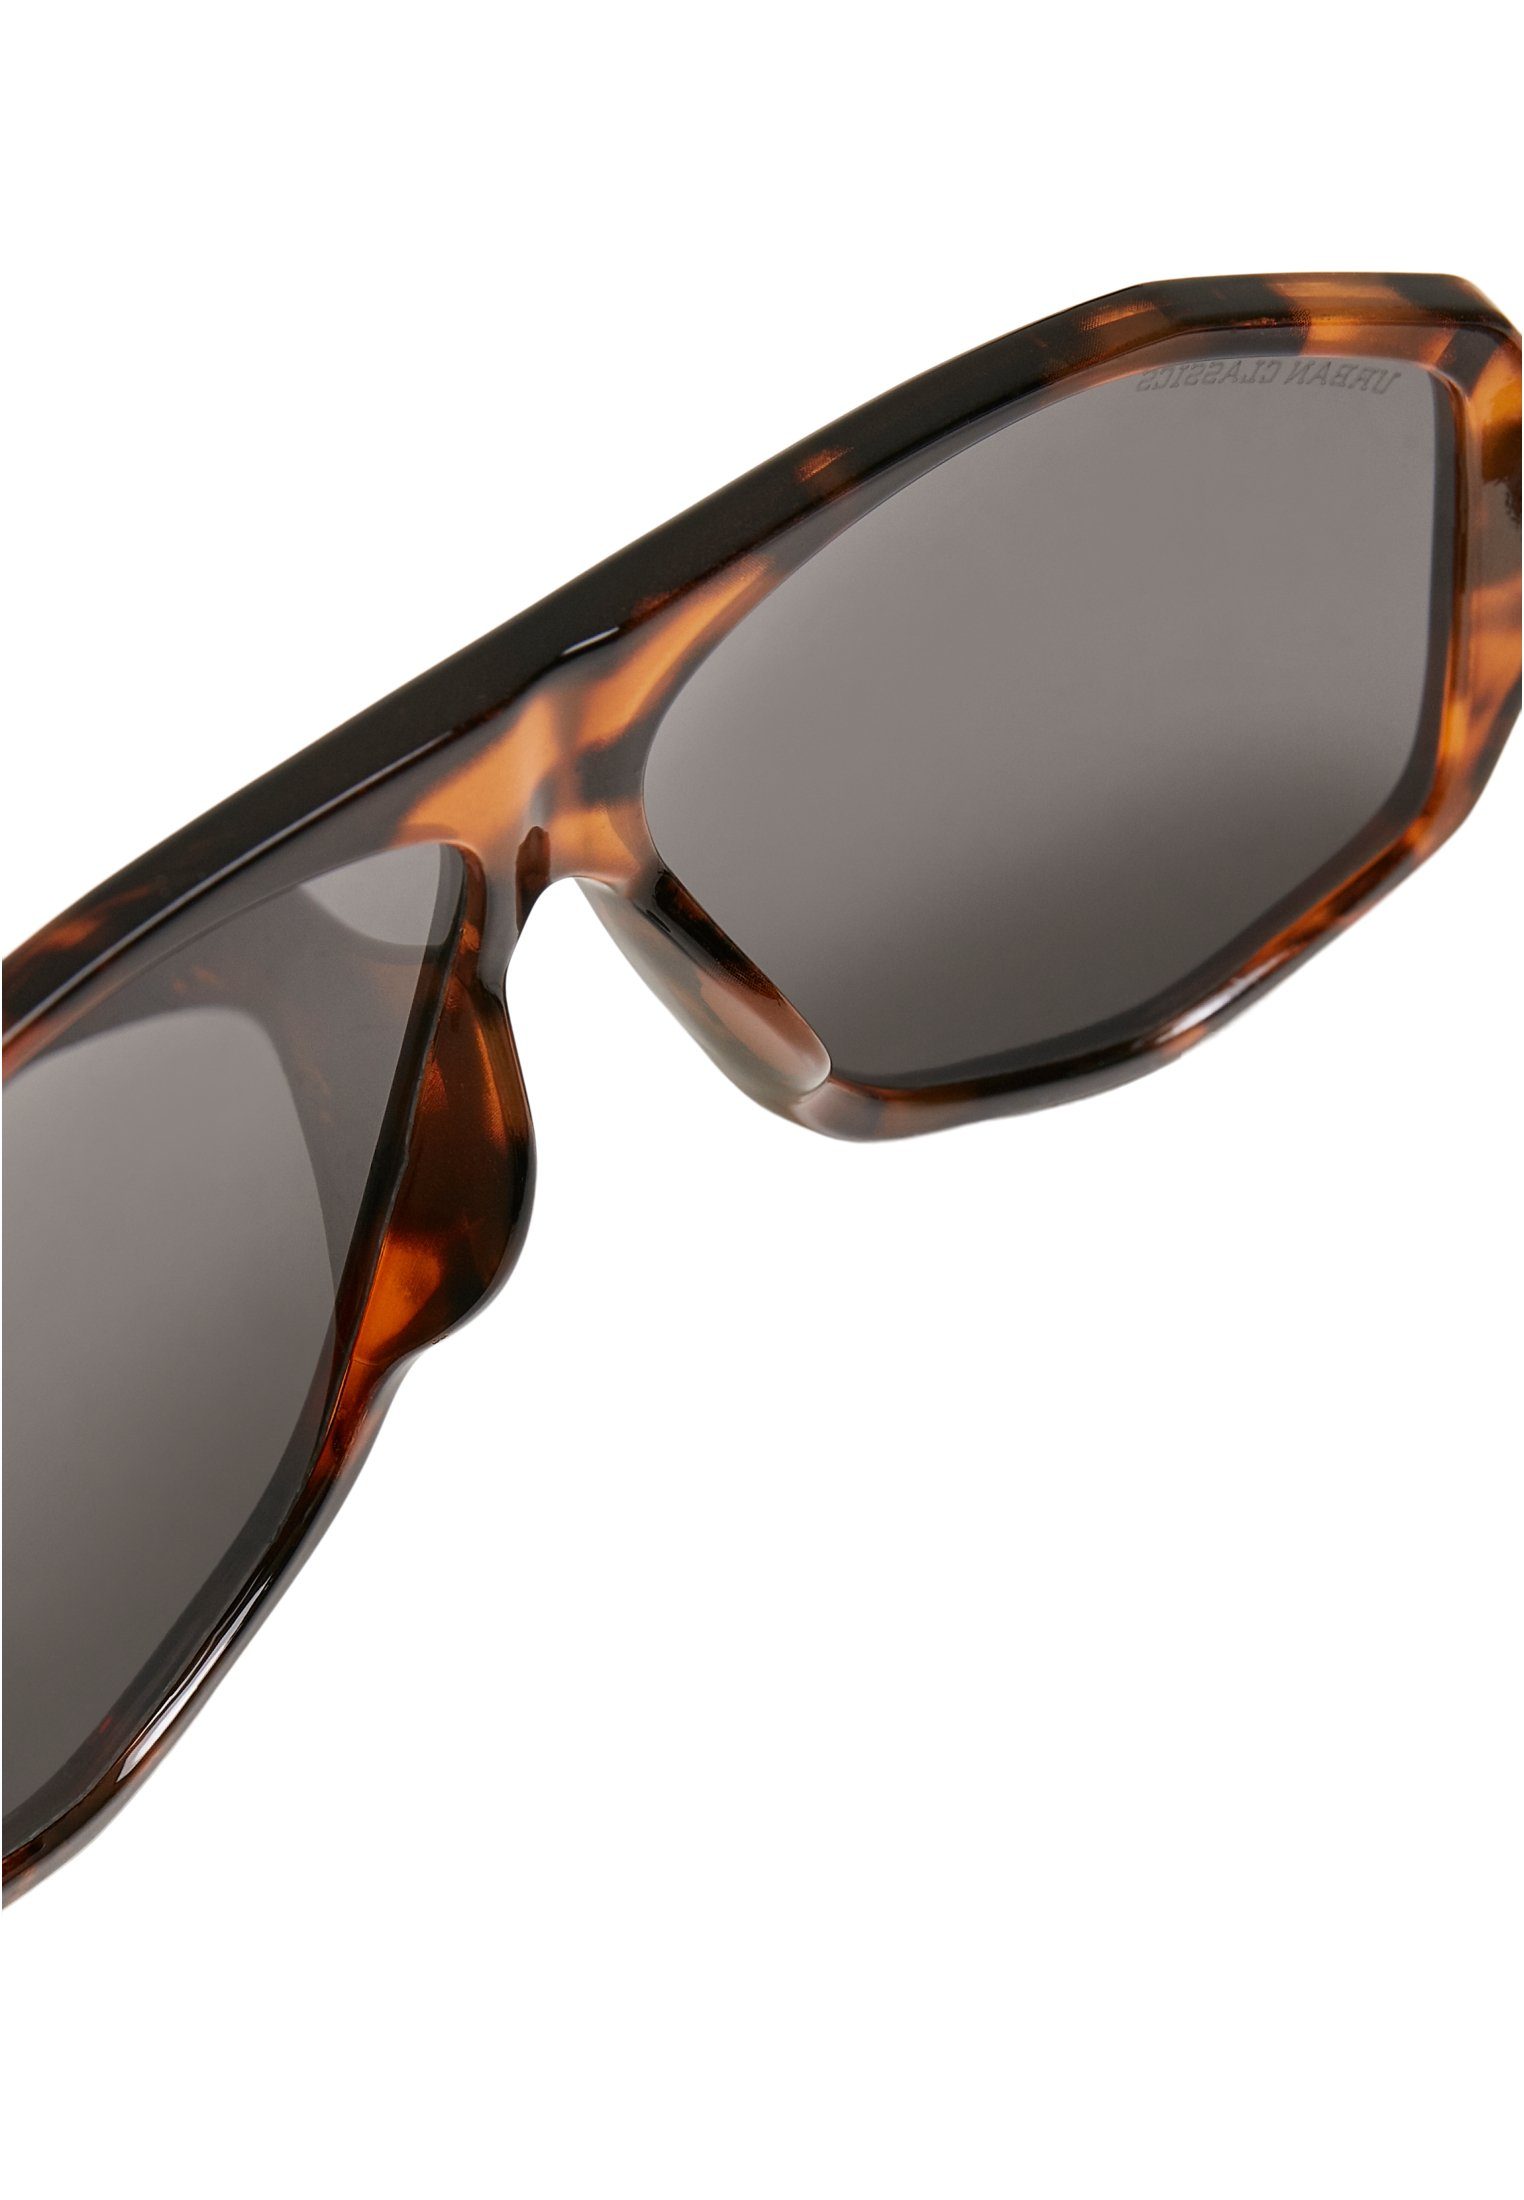 Sonnenbrille leo/black brown Sunglasses 101 CLASSICS Accessoires URBAN UC